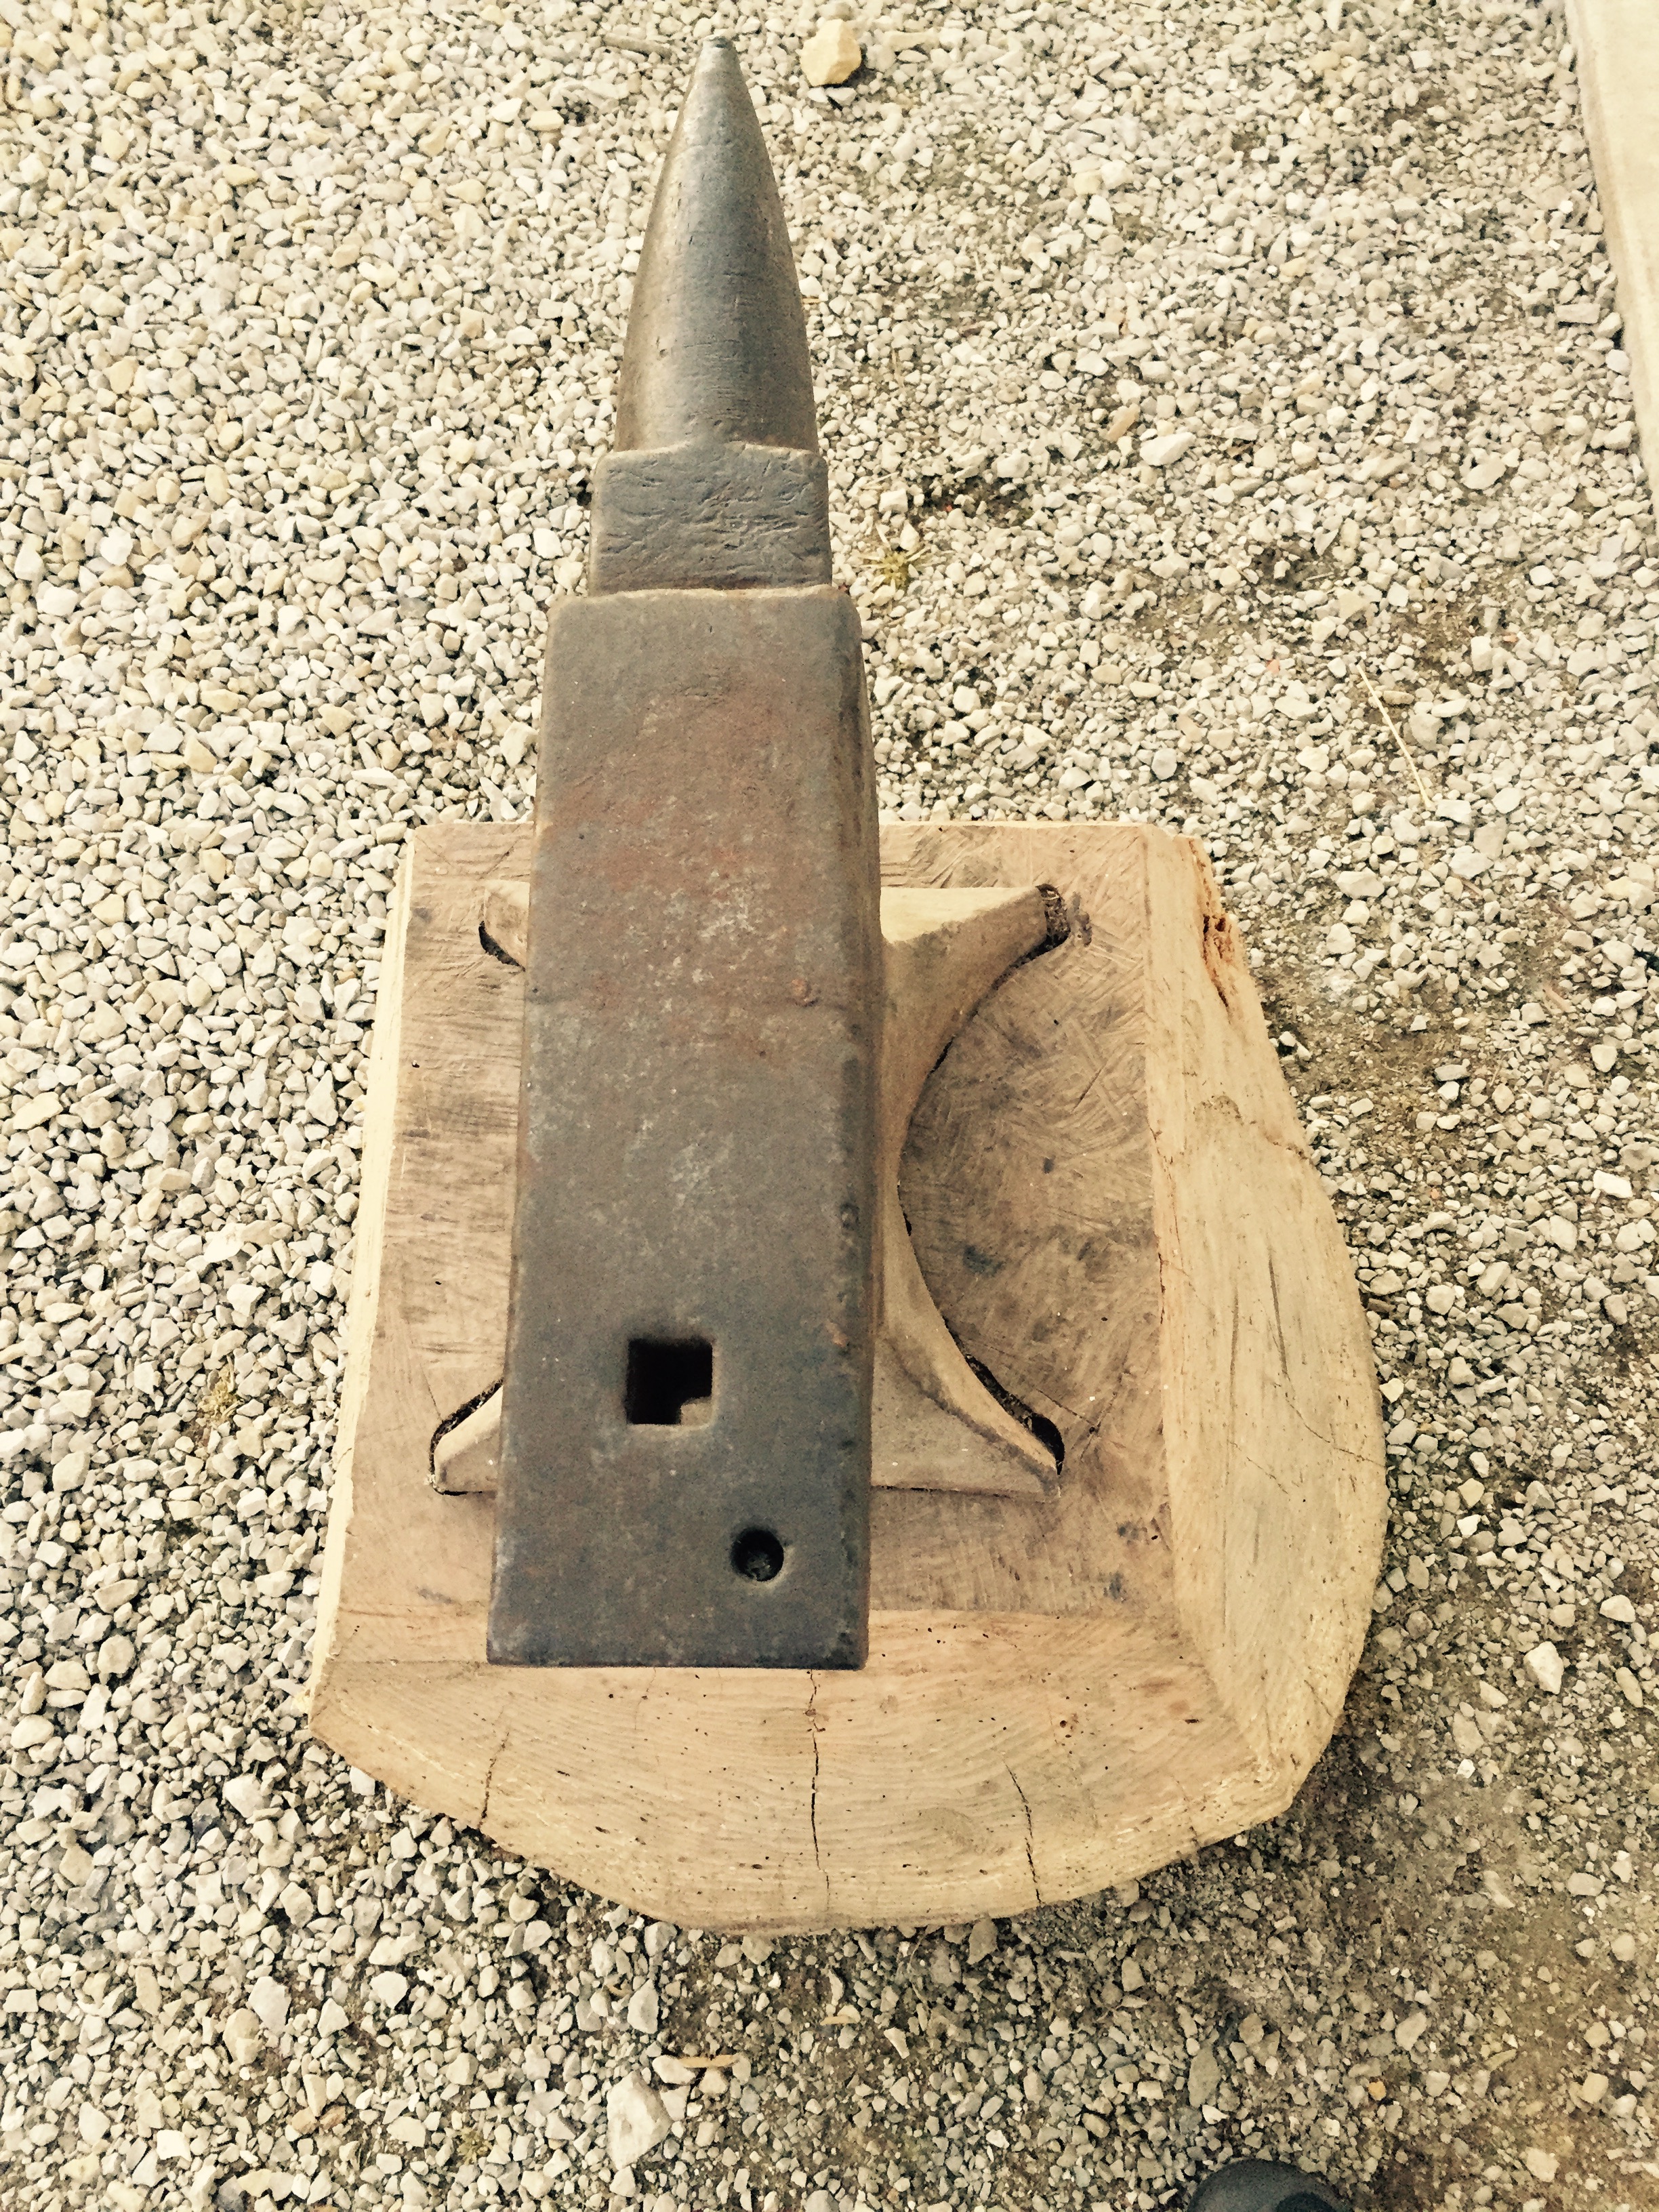 100 lb anvil for sale